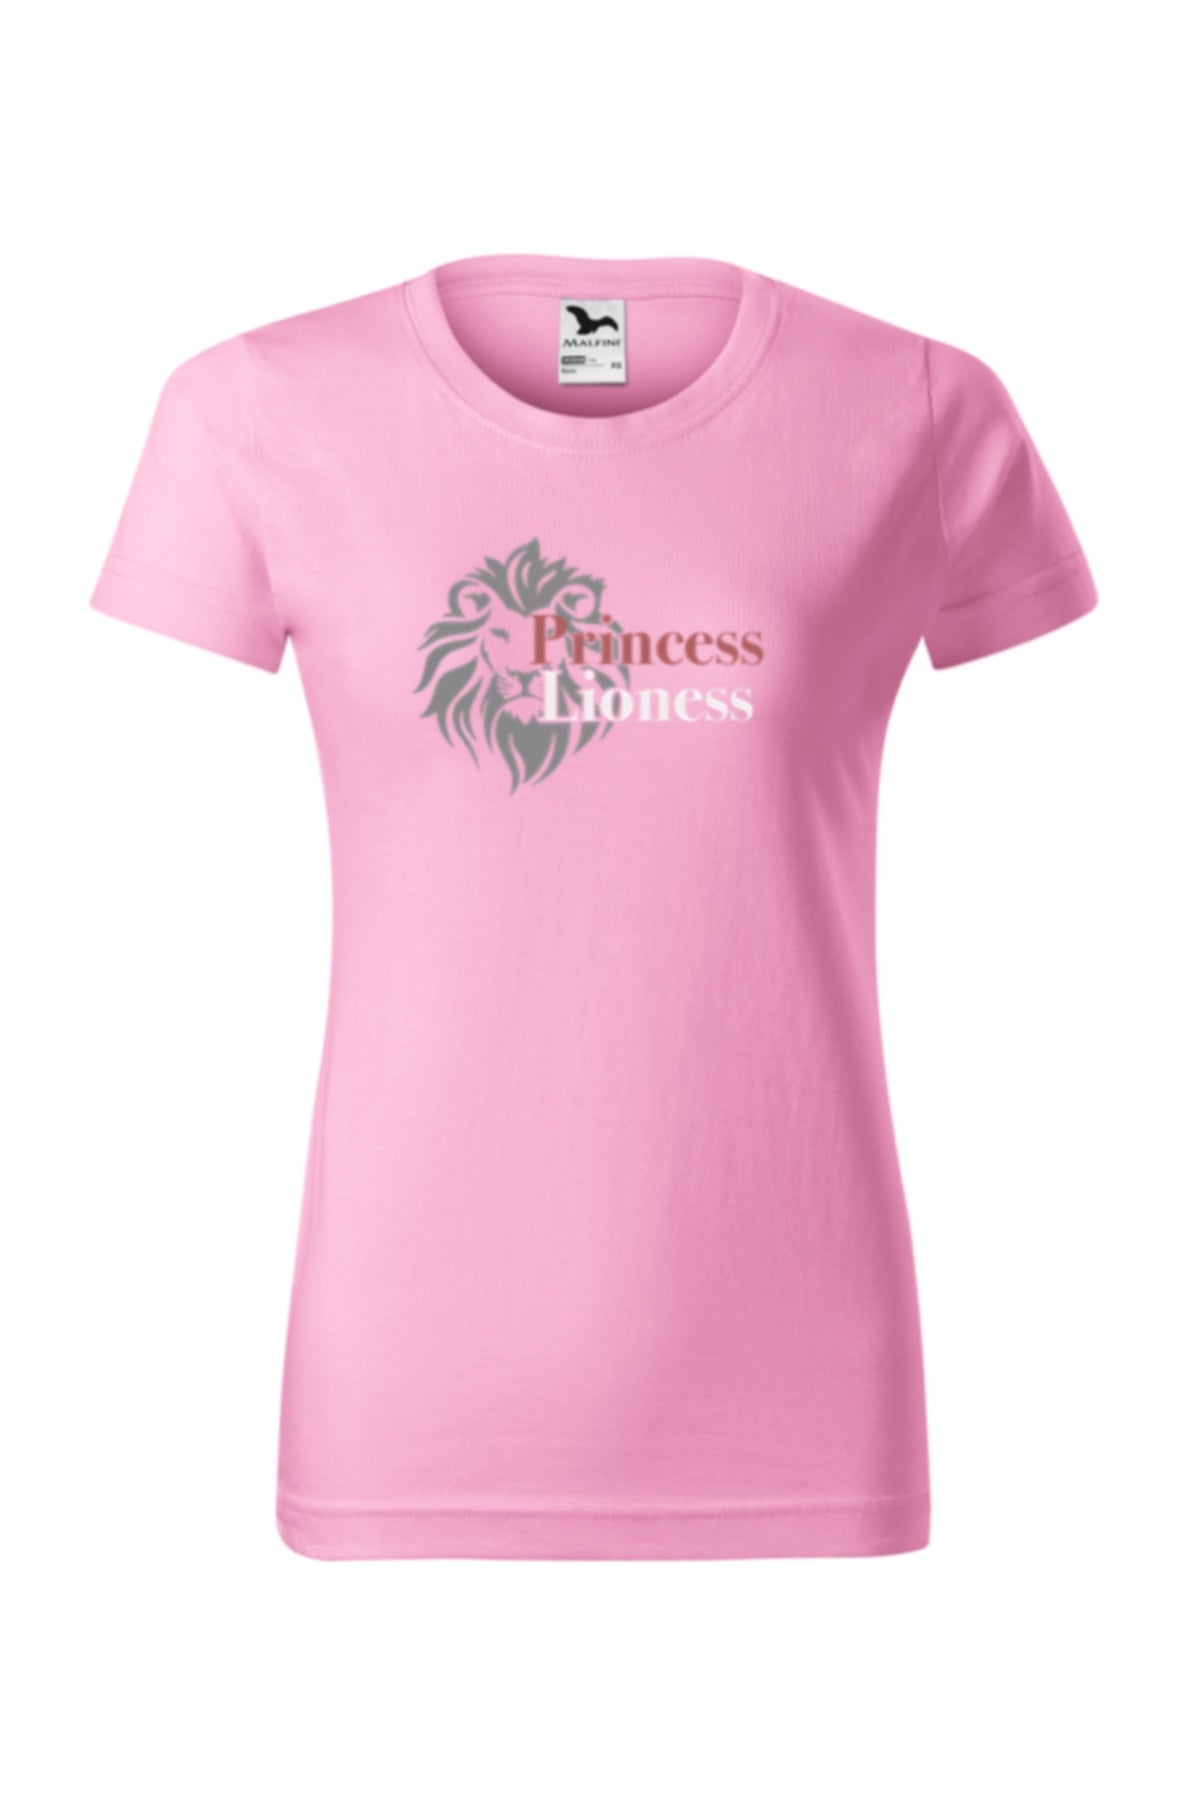 Princess Lioness T-shirt